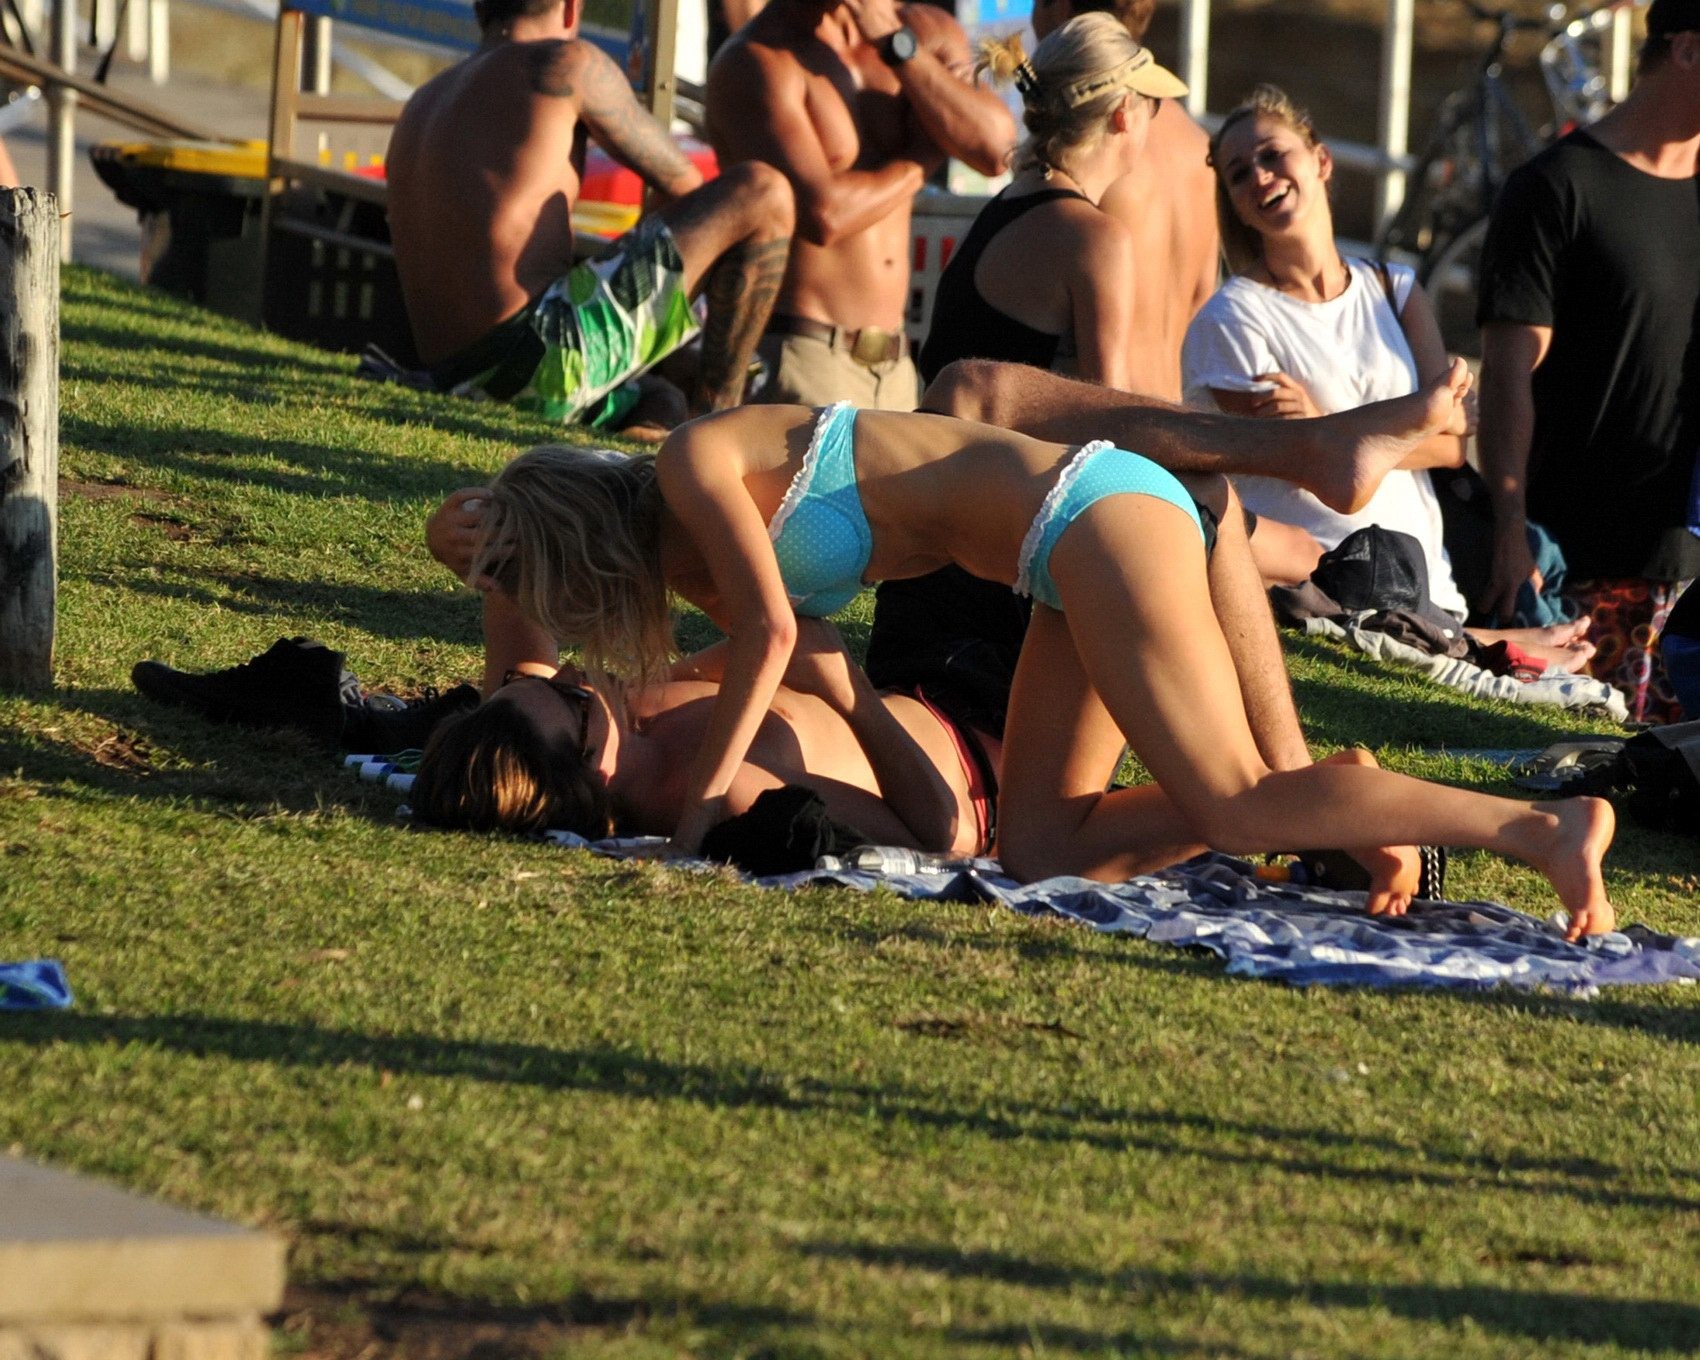 Samara Weaving in bikini petting with her boyfriend on Bondy Beach in Australia #75233749